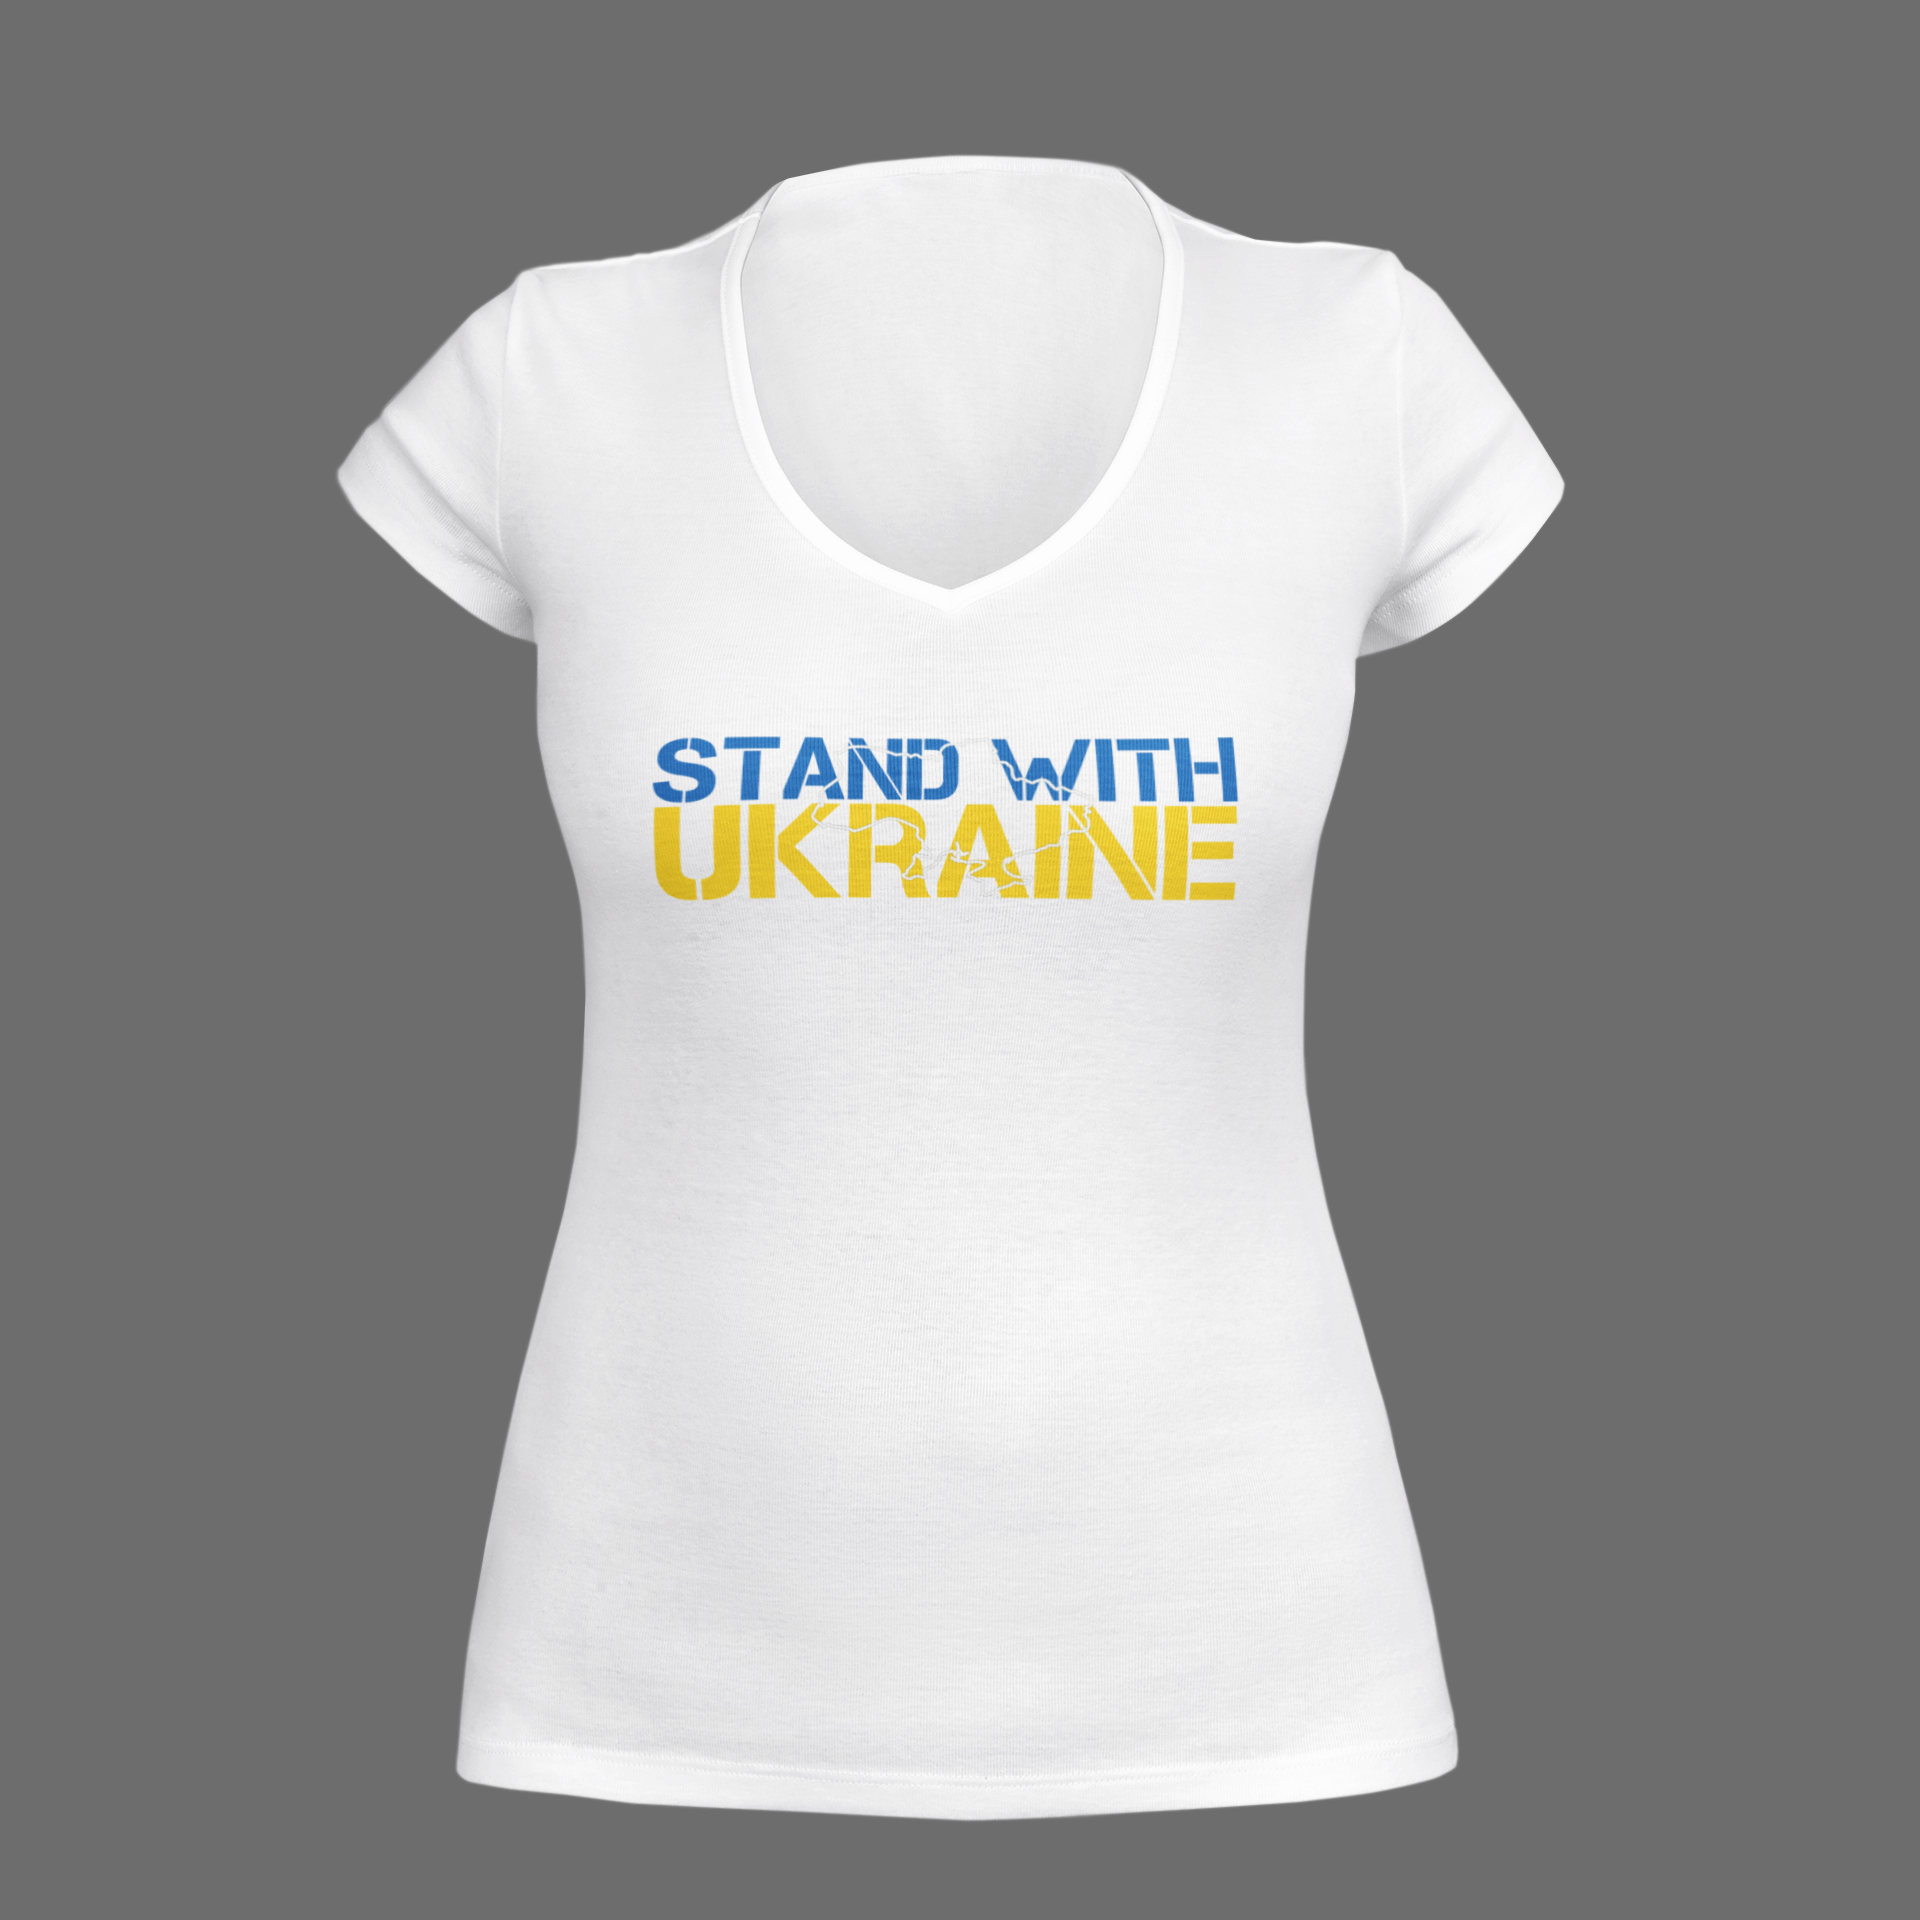 Stand with Ukraine Women's V-Neck